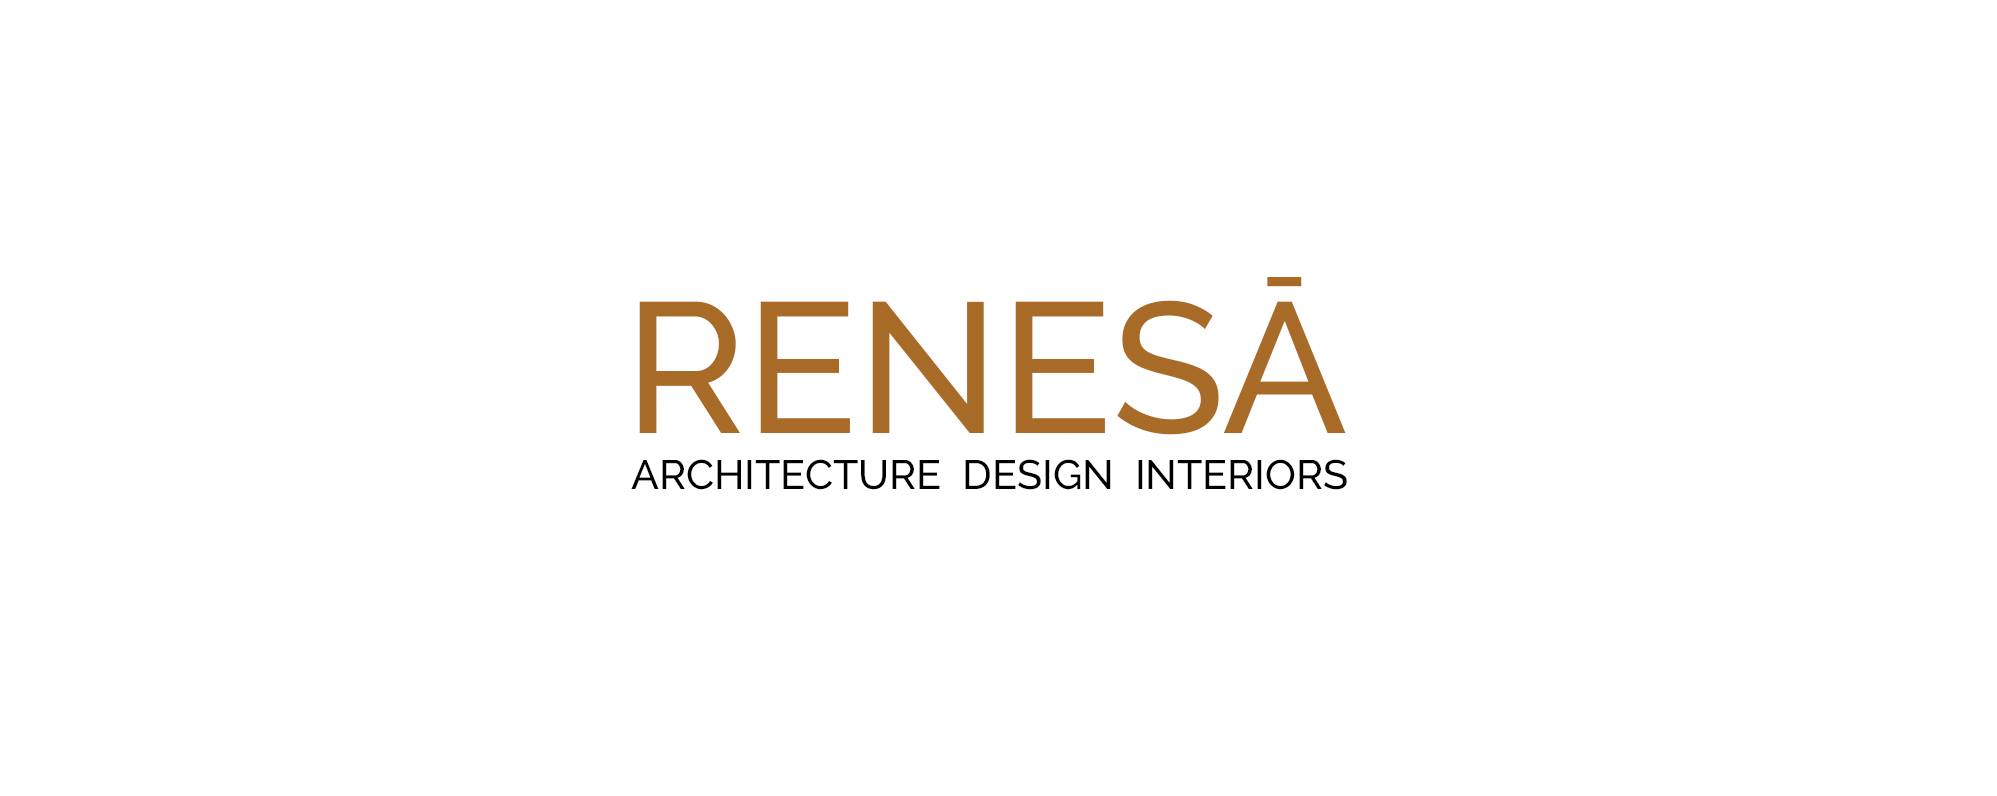 RENESA ARCHITECTURE DESIGN INTERIORS|IT Services|Professional Services